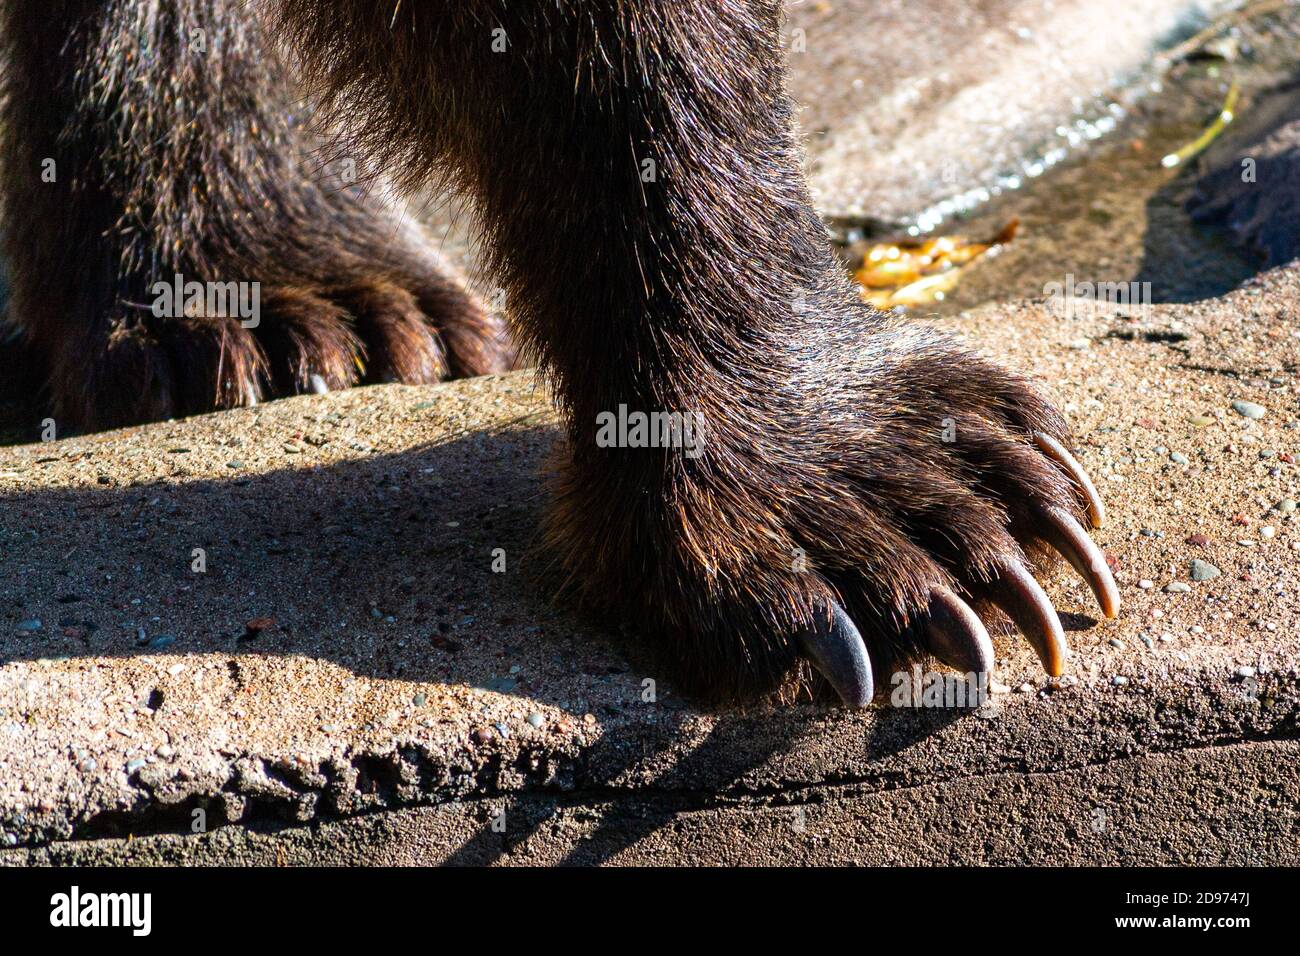 Brown bear forepaw closeup photo Stock Photo